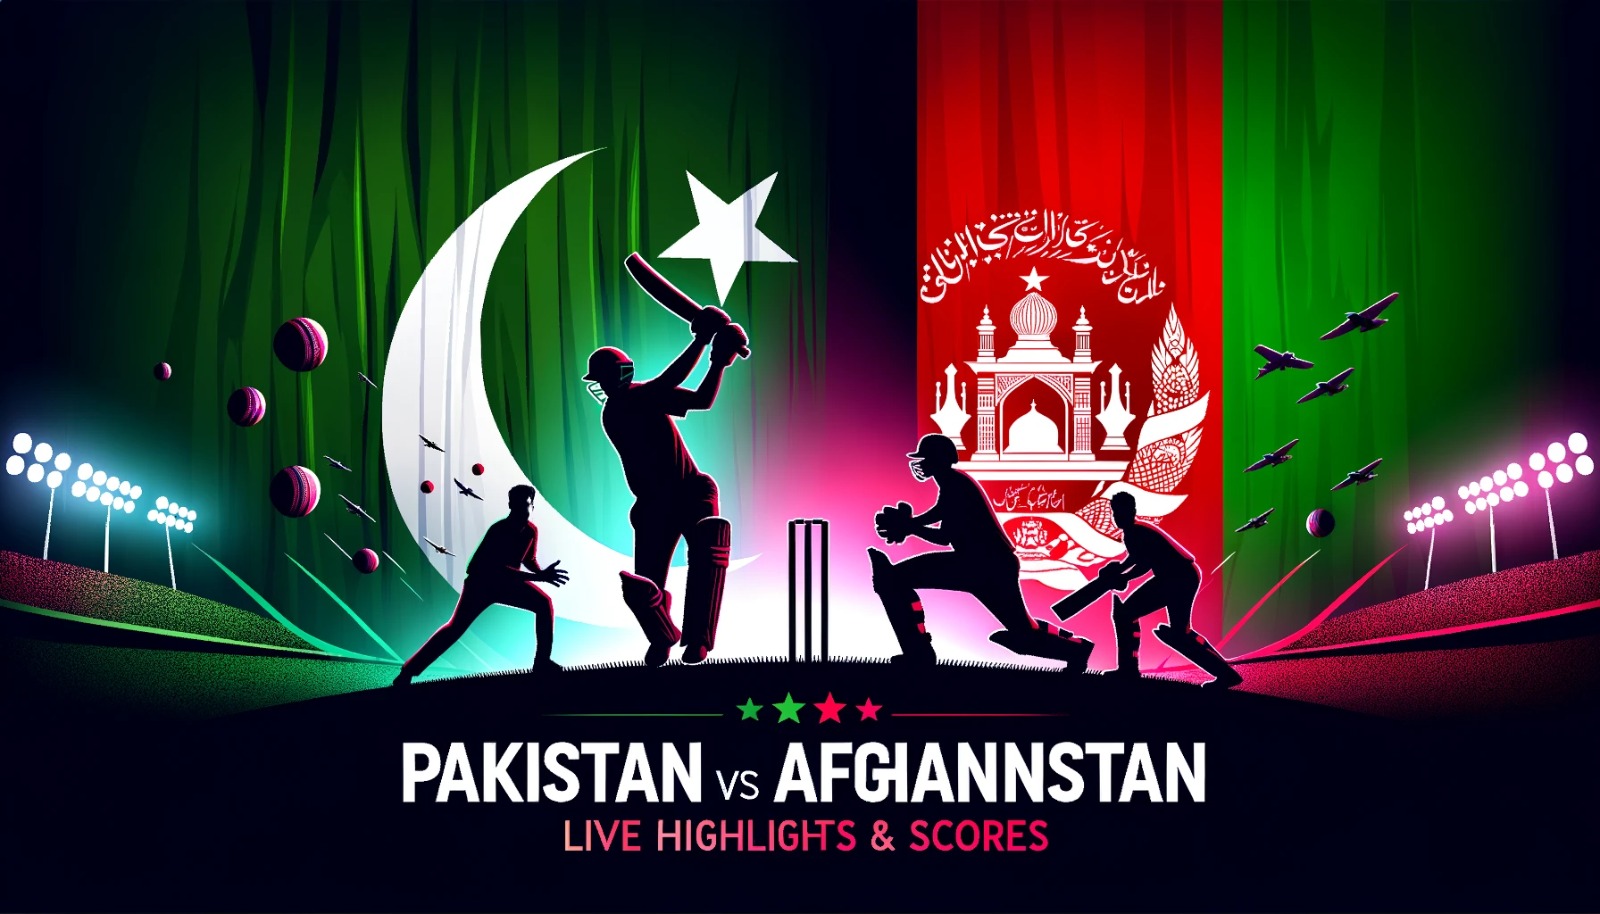 Pakistan vs Afghanistan Highlights Live Cricket Score (T20) Watch Live